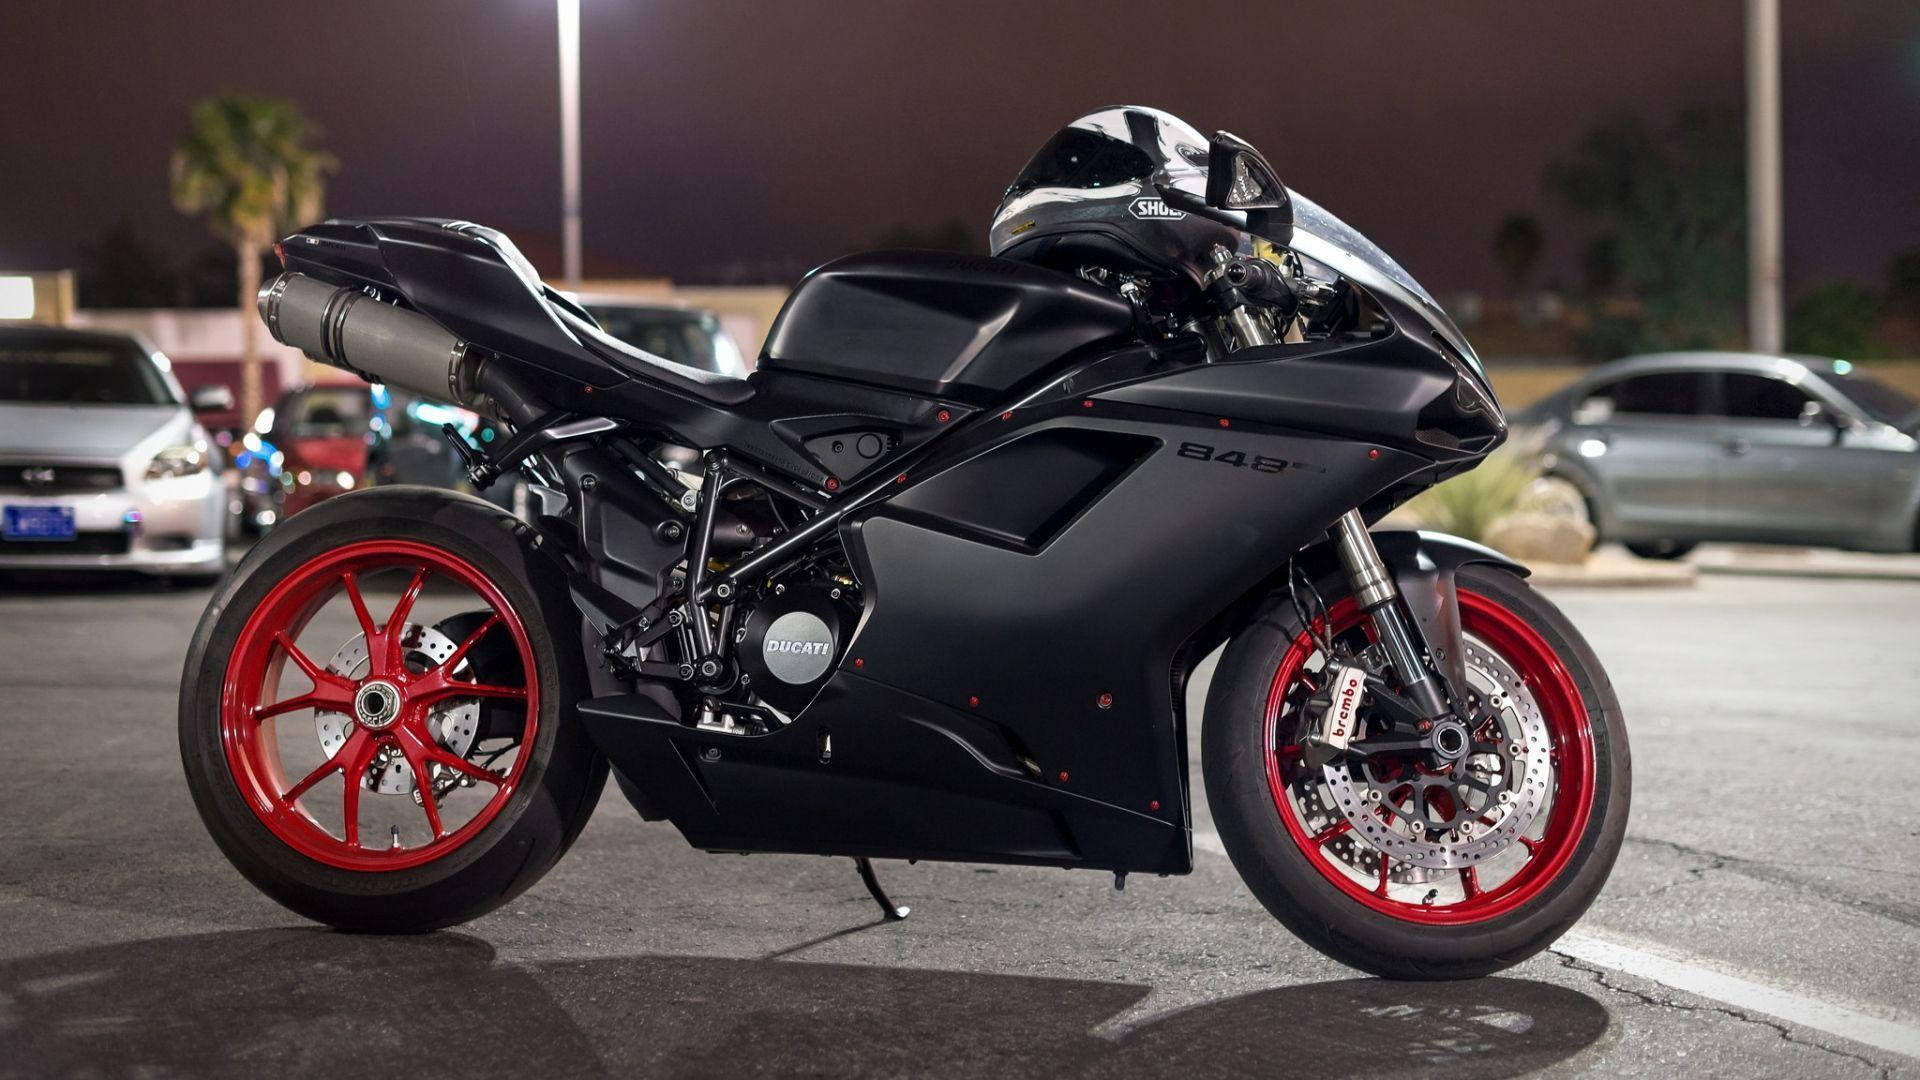 Caption: Majestic Black Ducati 848 Bike In Hd